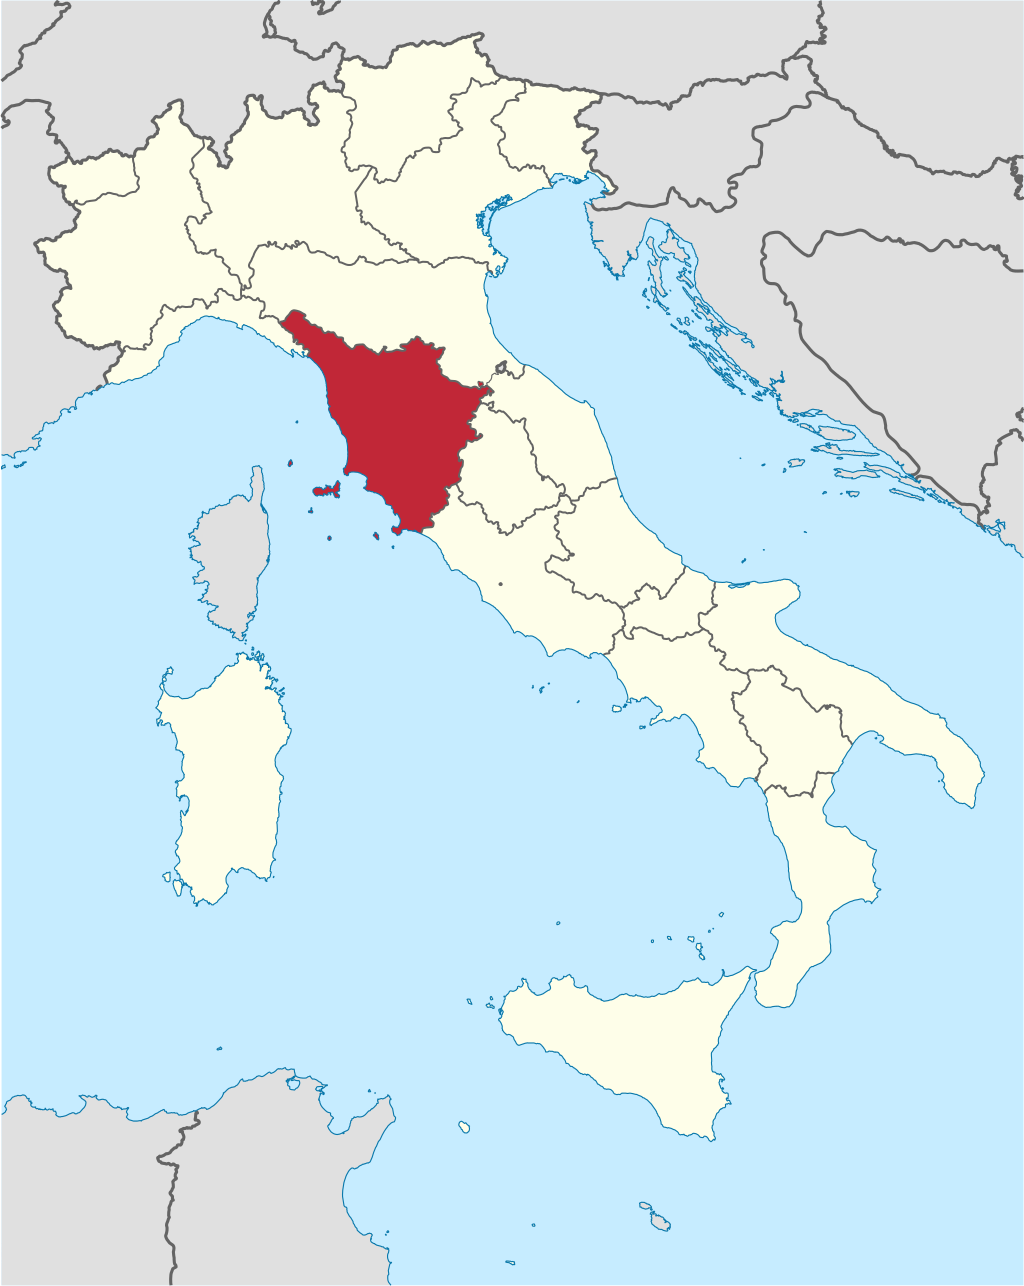 Corallo Therme Urbex location or around the region Toscana (Livorno), Italy